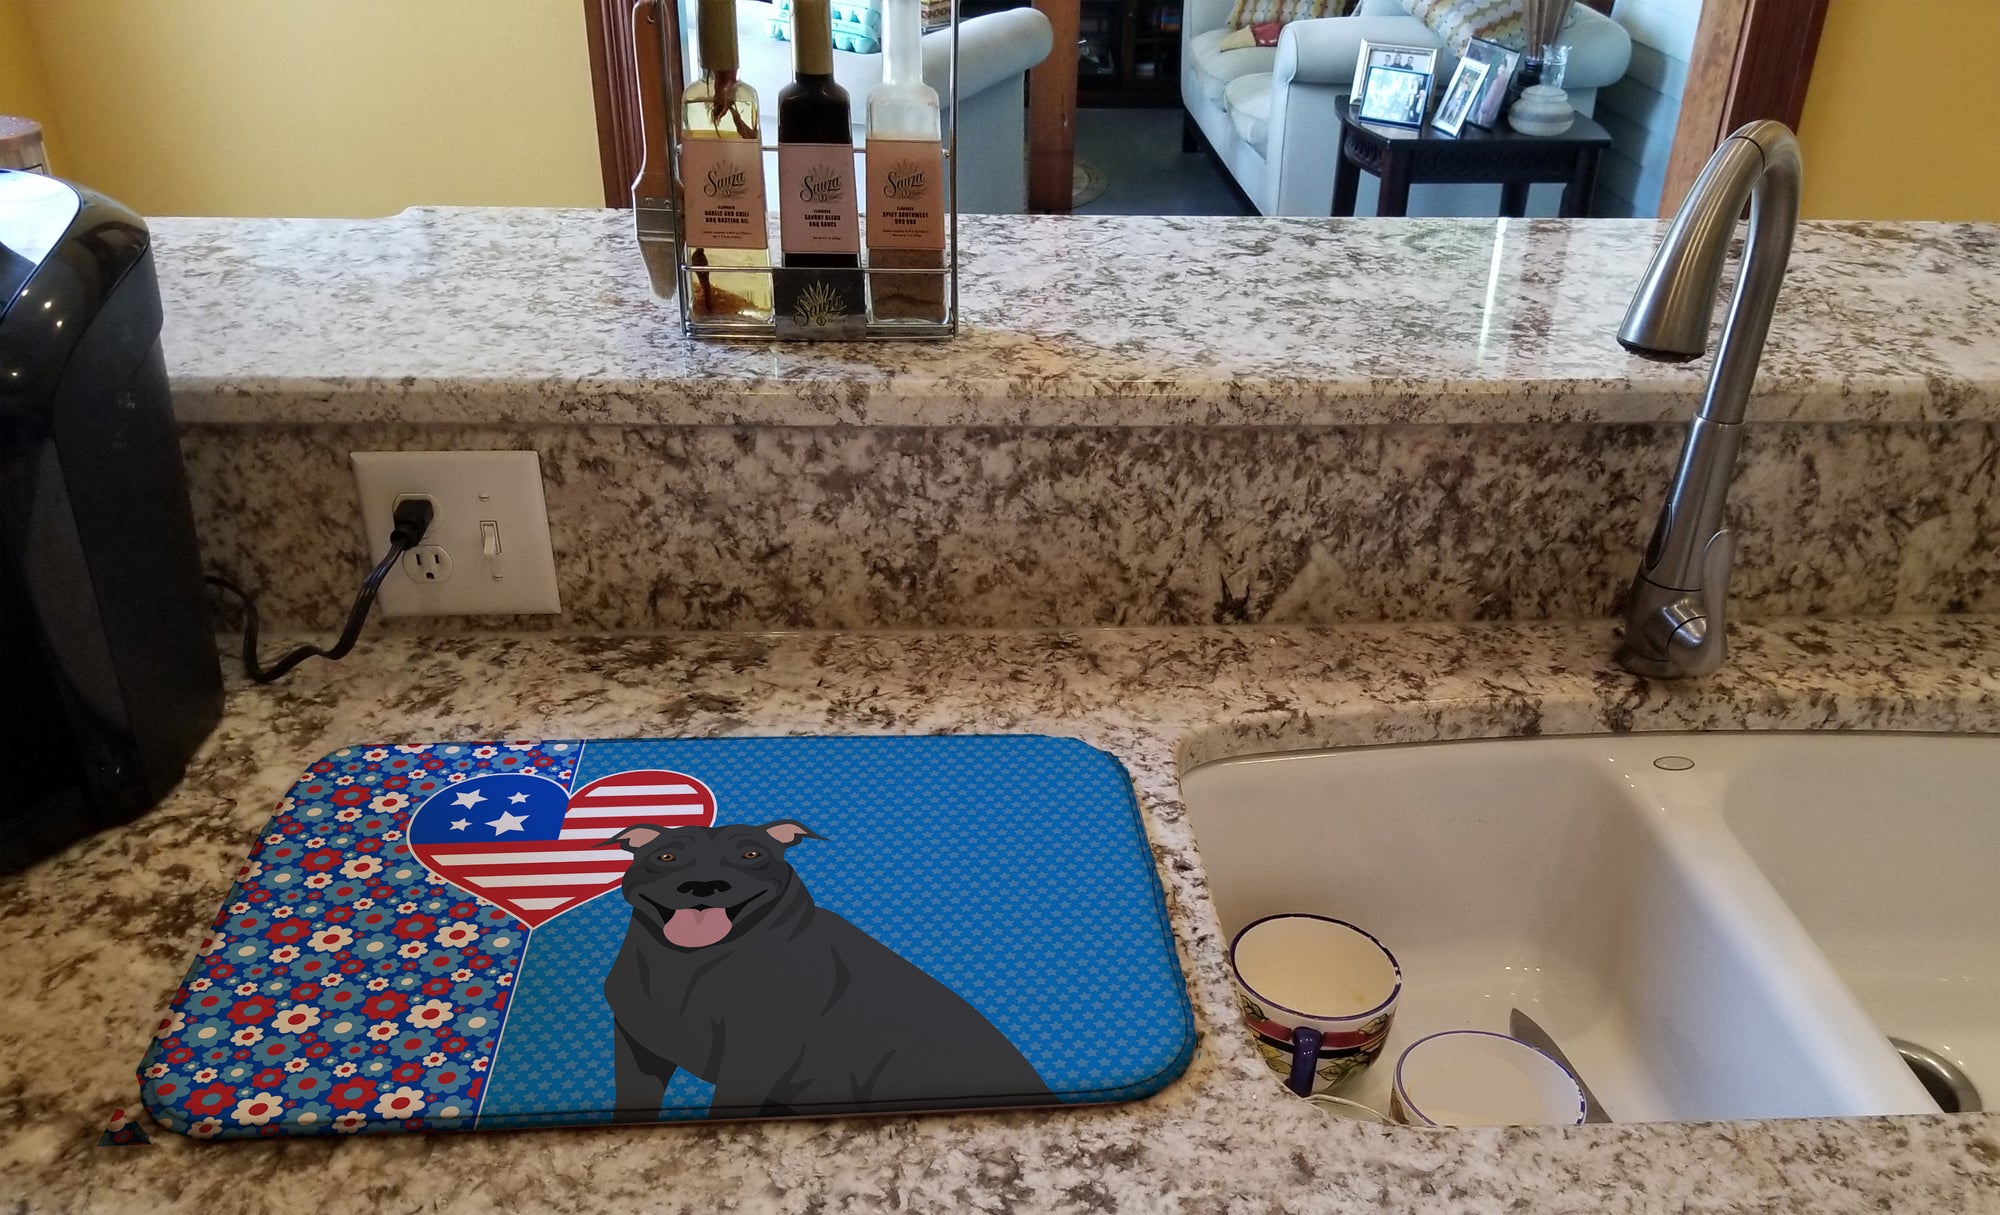 Black Pit Bull Terrier USA American Dish Drying Mat